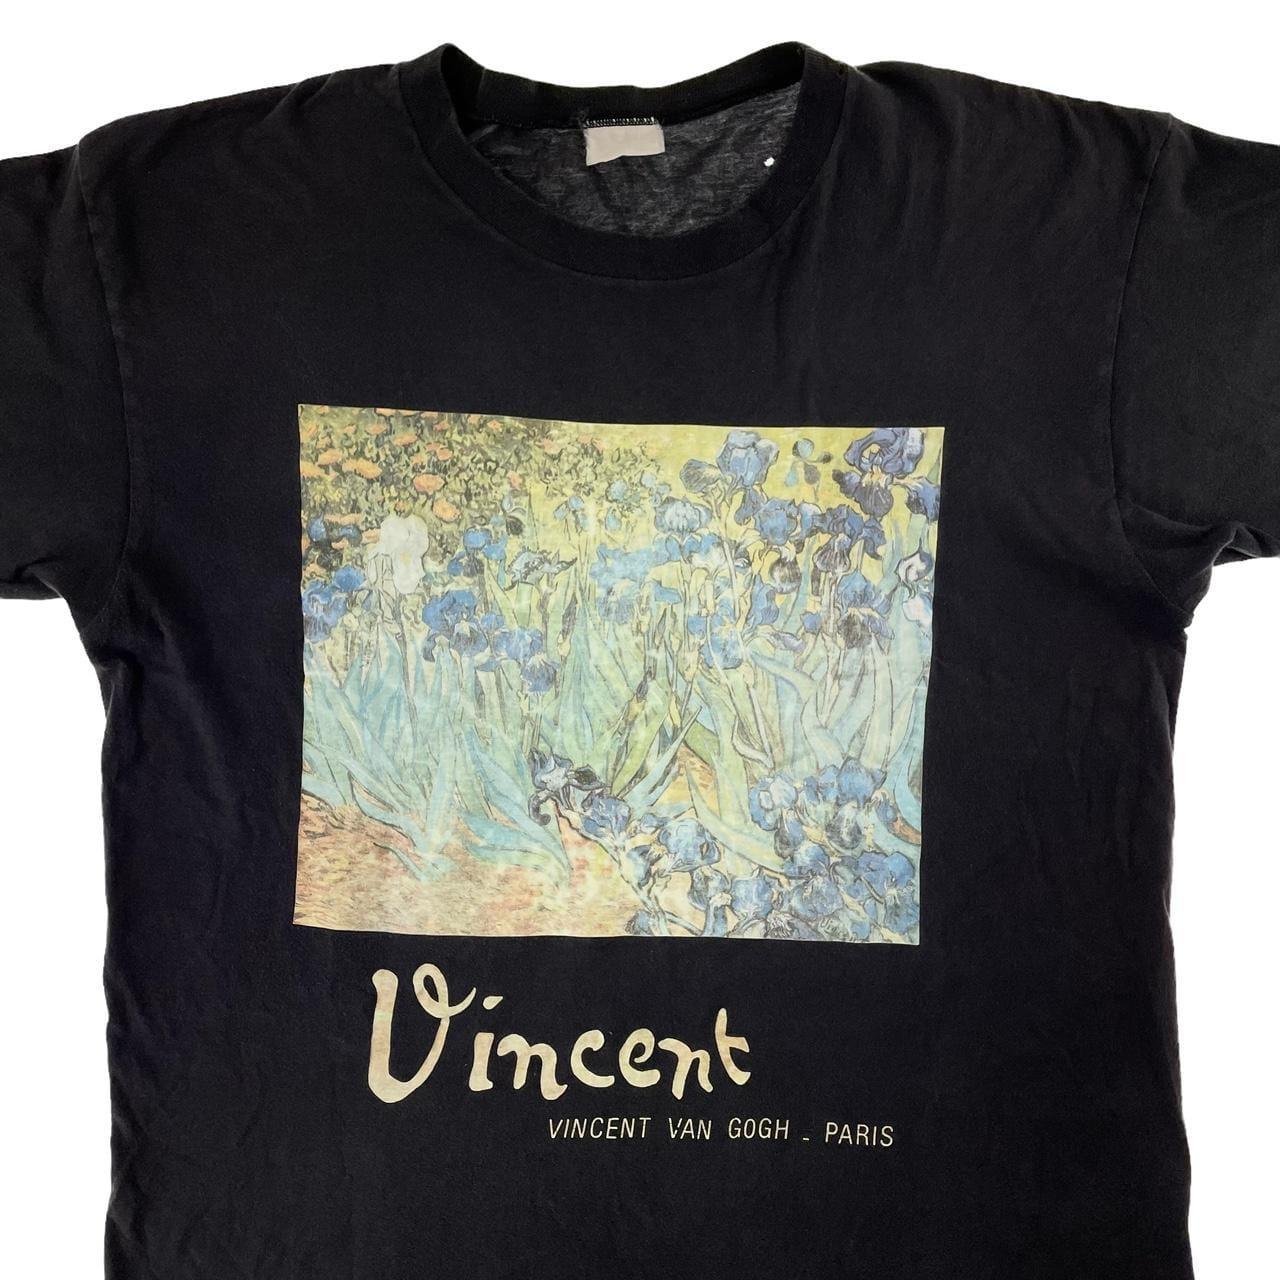 Vintage Van Gogh irises art t shirt size M - Known Source